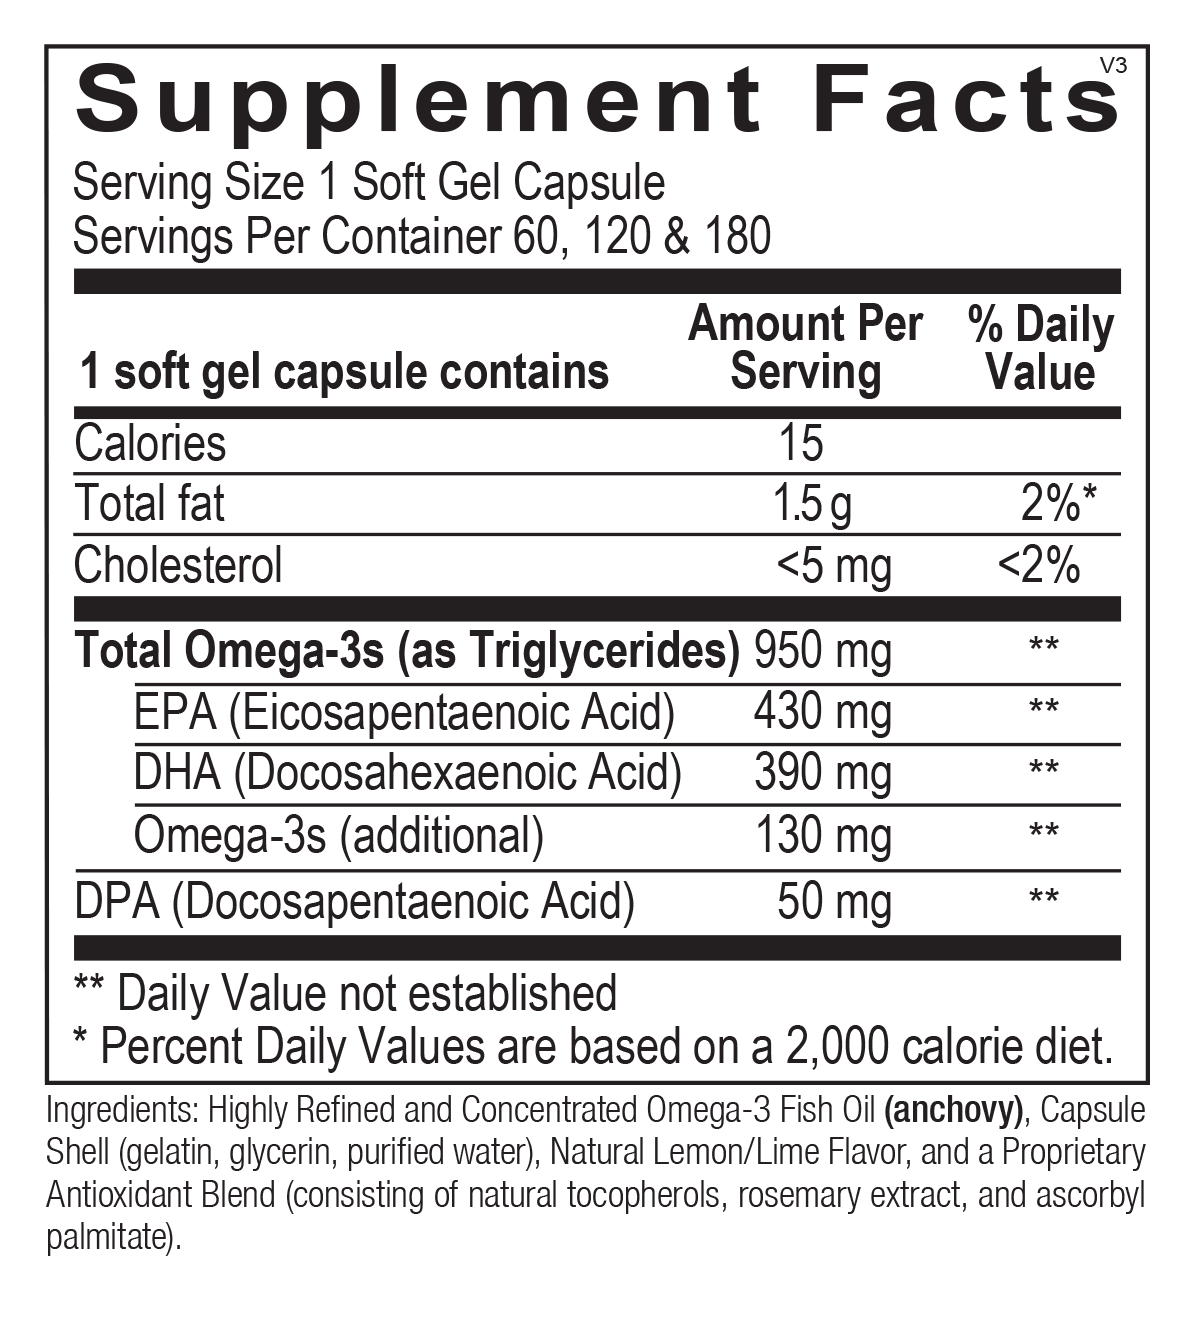 Ortho Molecular Orthomega 820 Supplement Facts. Photo of the supplement facts from the Orthomega bottle.